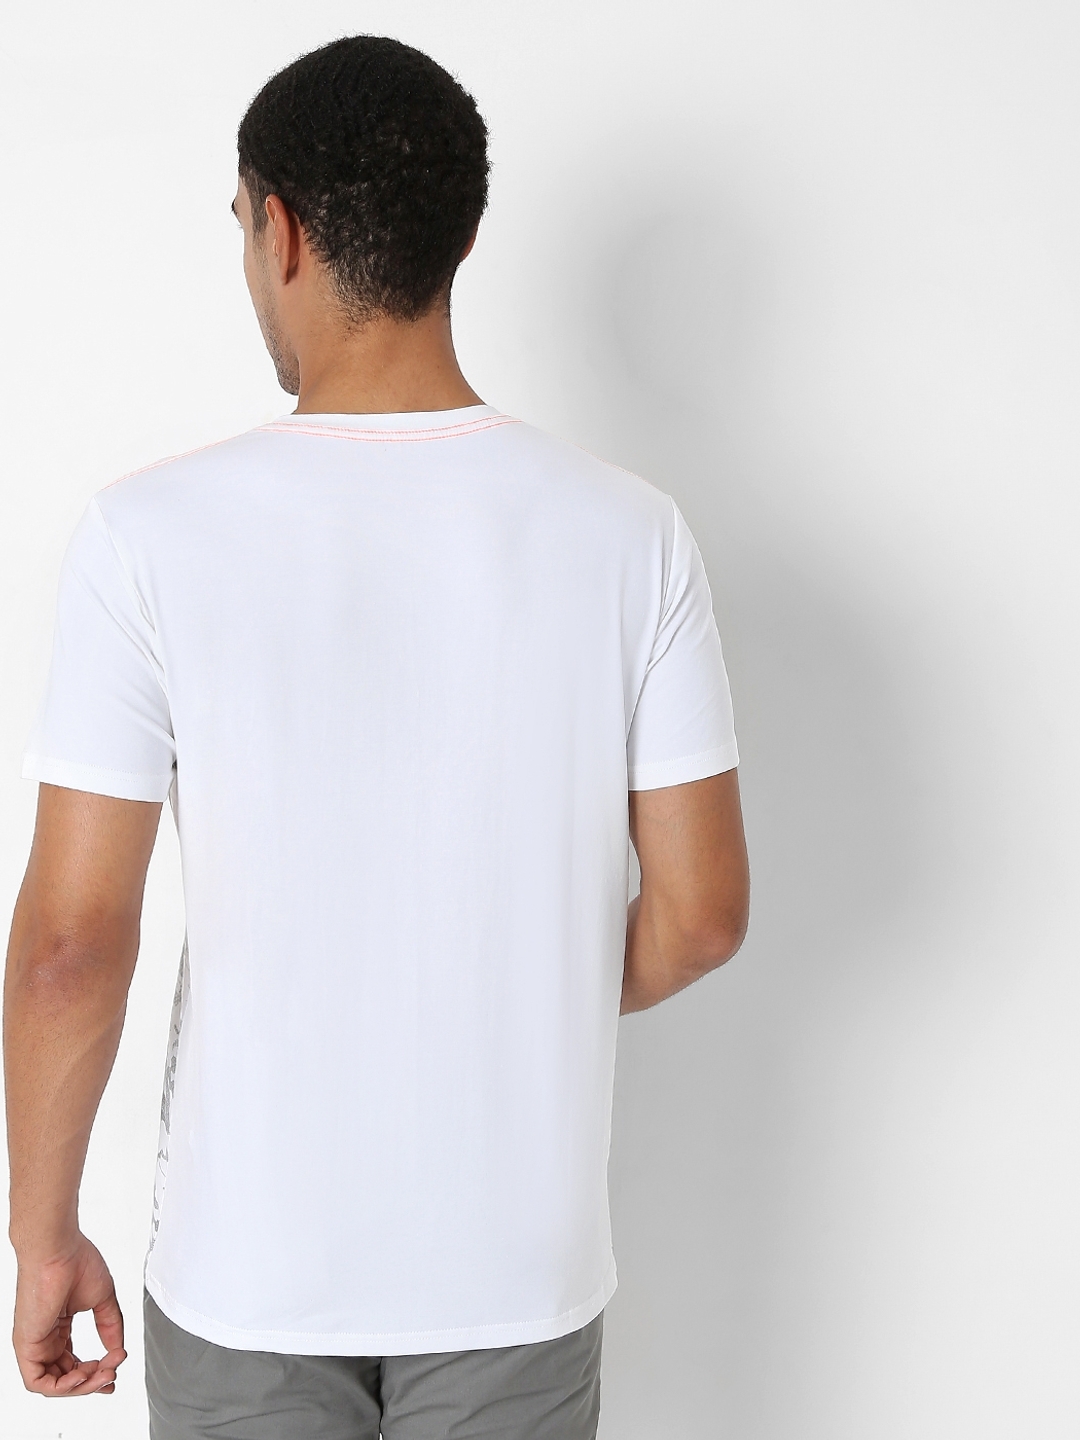 Scuba Ombre-Camo Slim Fit Crew-Neck T-shirt